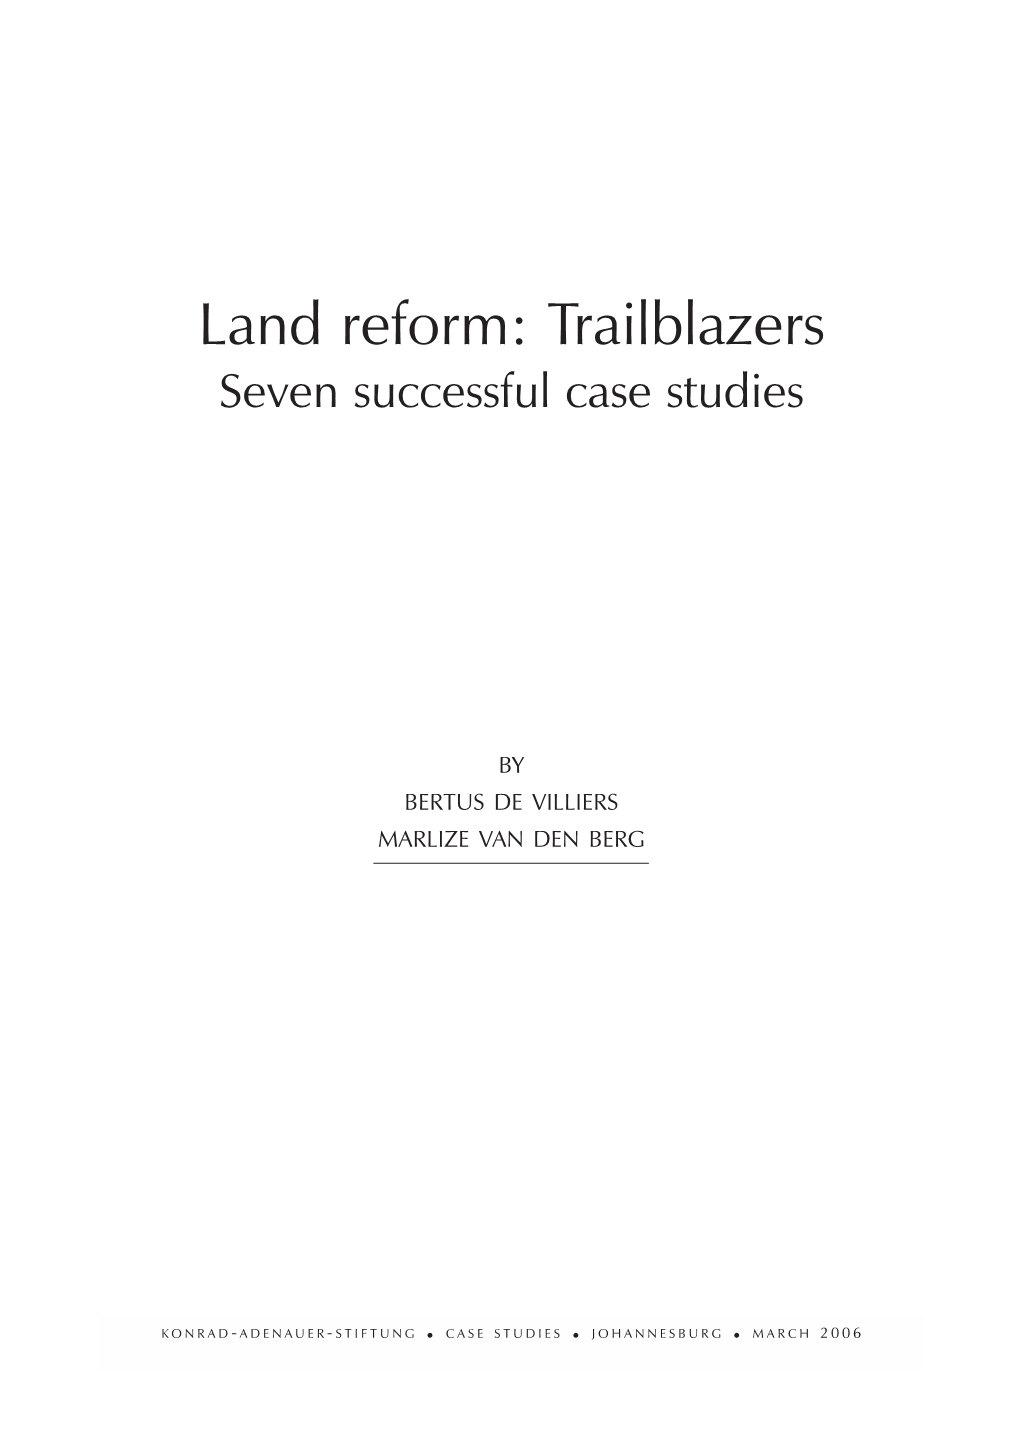 Land Reform: Trailblazers Seven Successful Case Studies